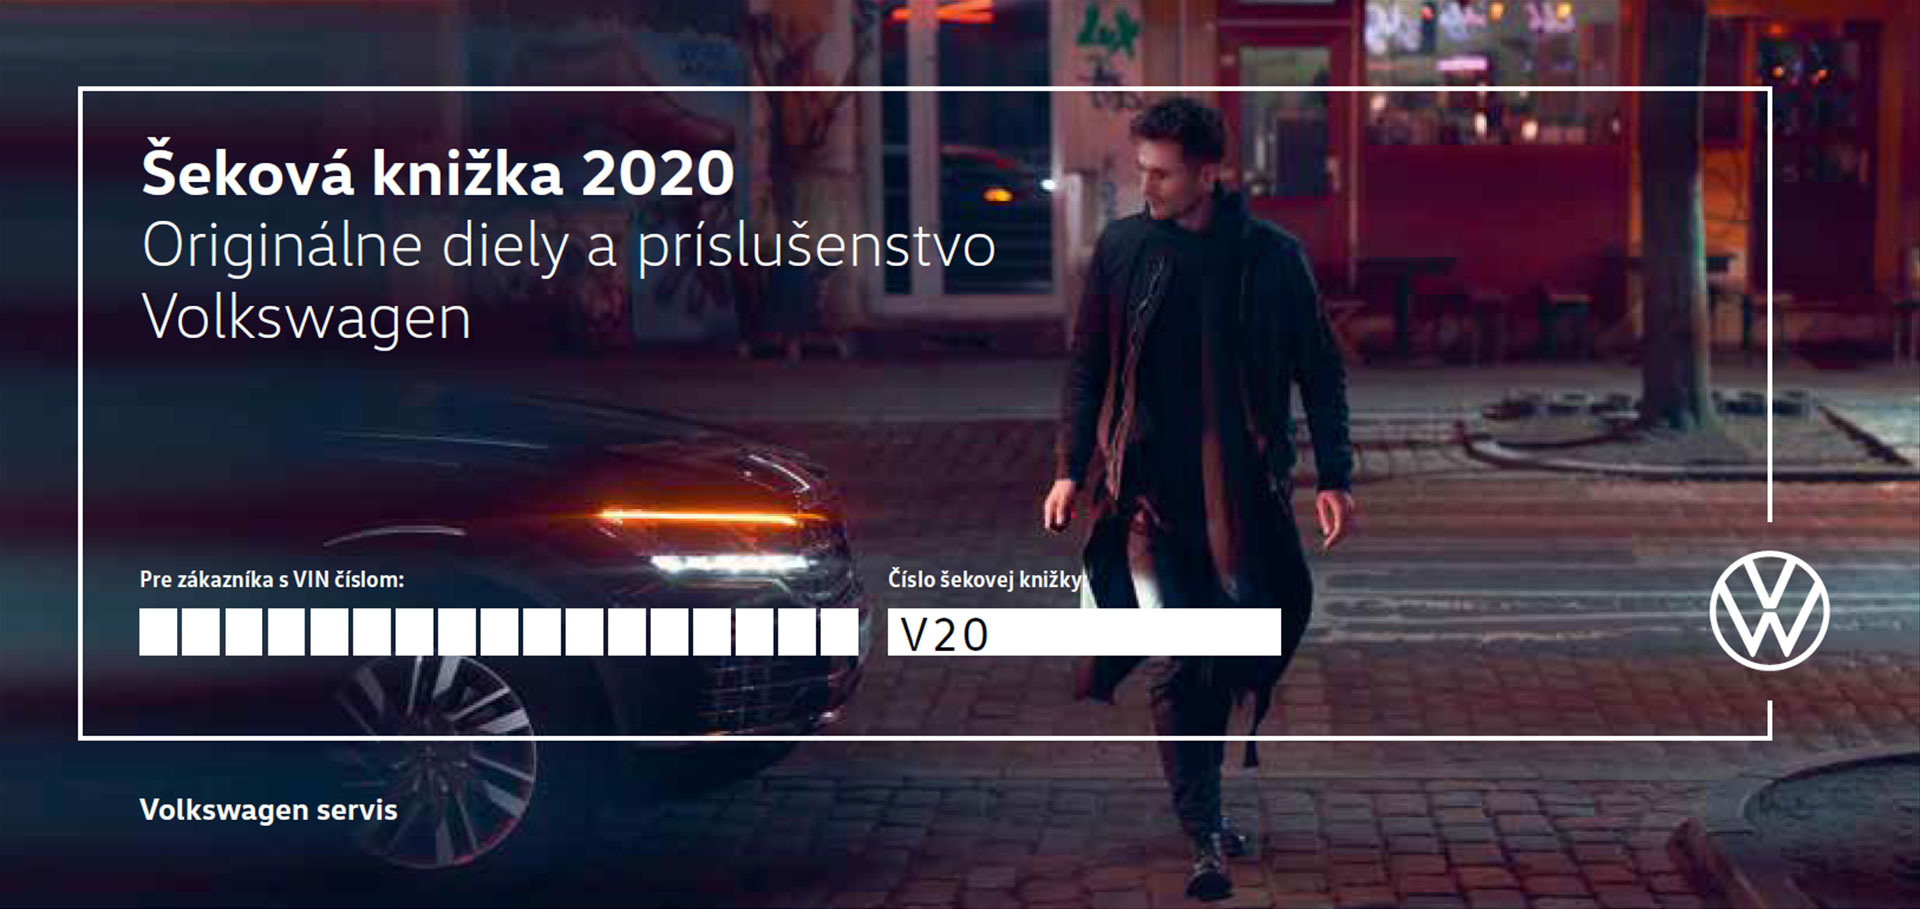 Autoprofit.sk Šeková knižka Volkswagen 2020